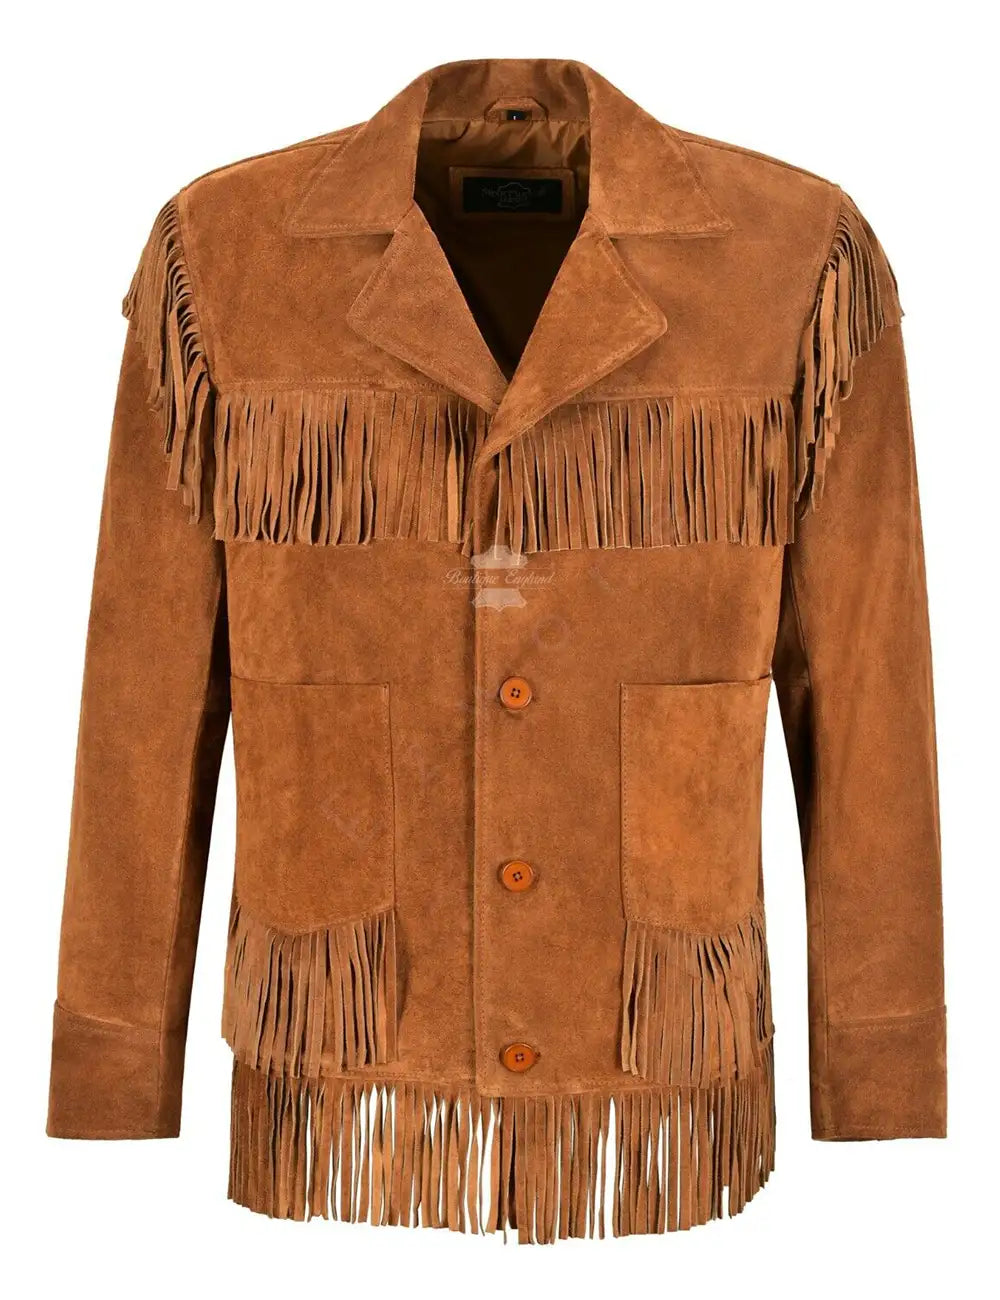 Men Western American Leather Fringed Jacket